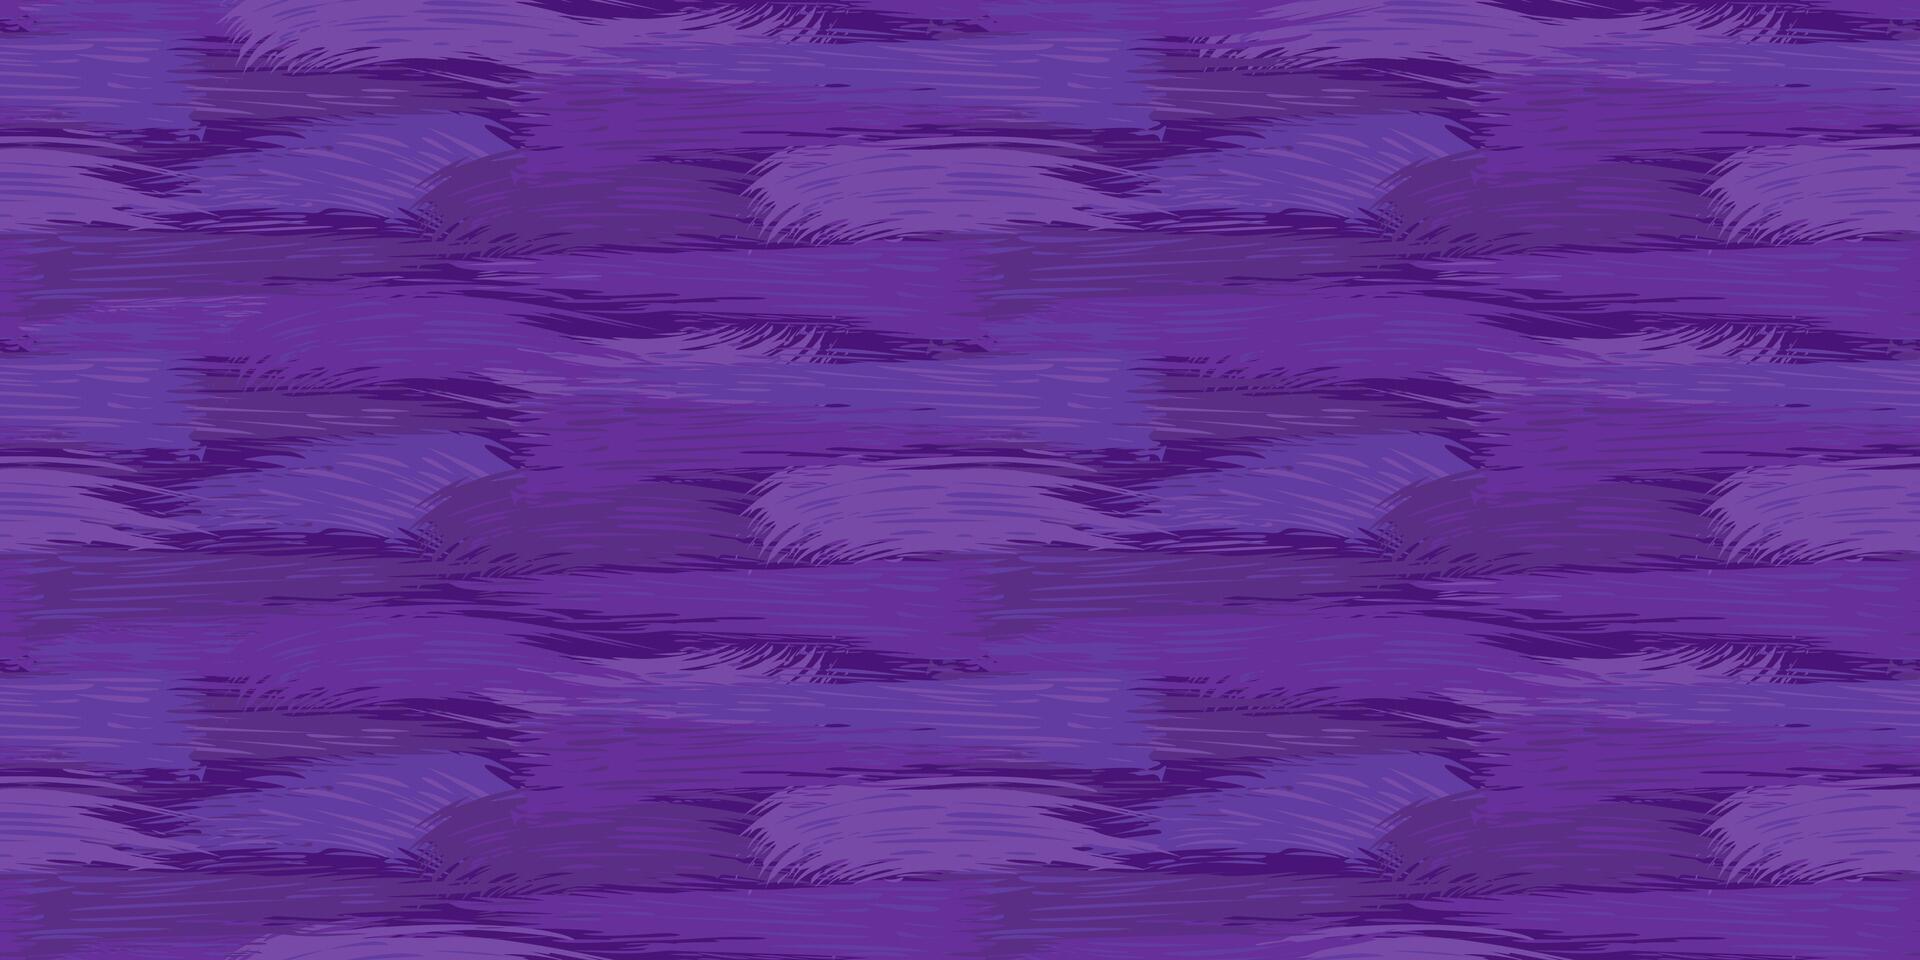 artístico resumen petróleo cepillo golpes textura sin costura modelo. monocromo Violeta salpicaduras de pintar en un púrpura antecedentes. mano dibujado bosquejo. collage modelo para diseños vector